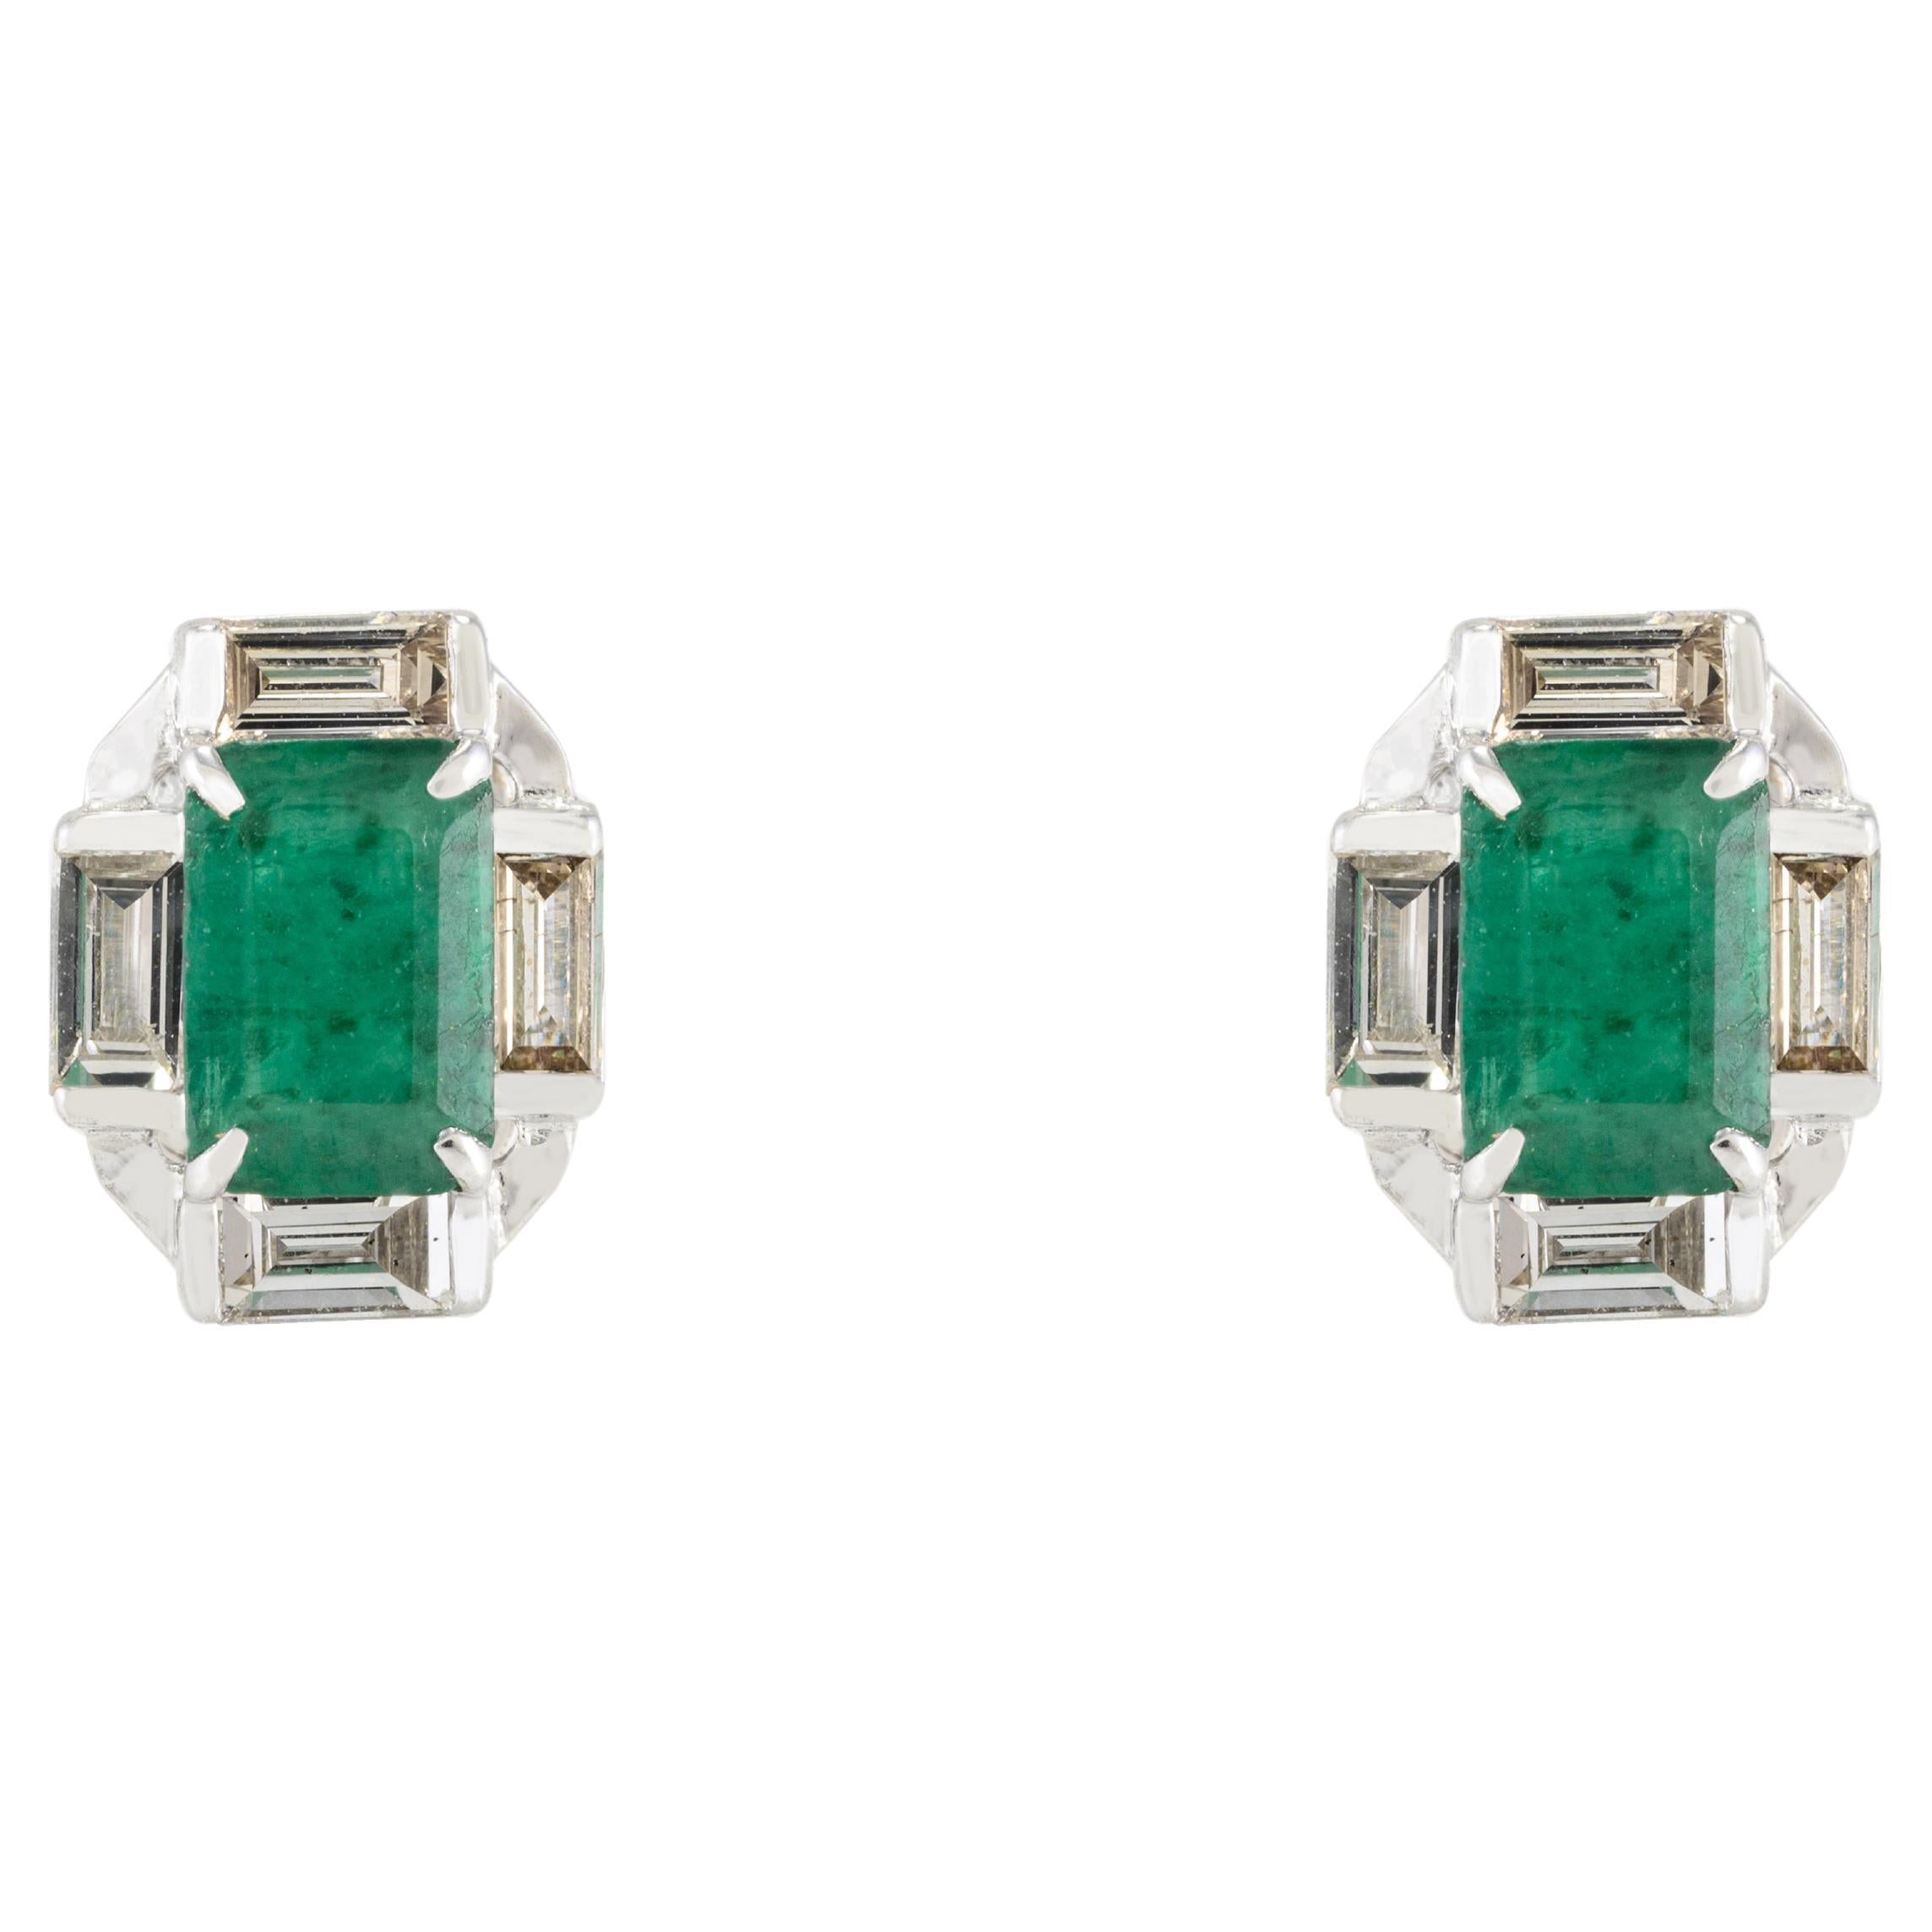 Art Deco 18k White Gold Diamond Halo Emerald Cut Natural Emerald Stud Earrings